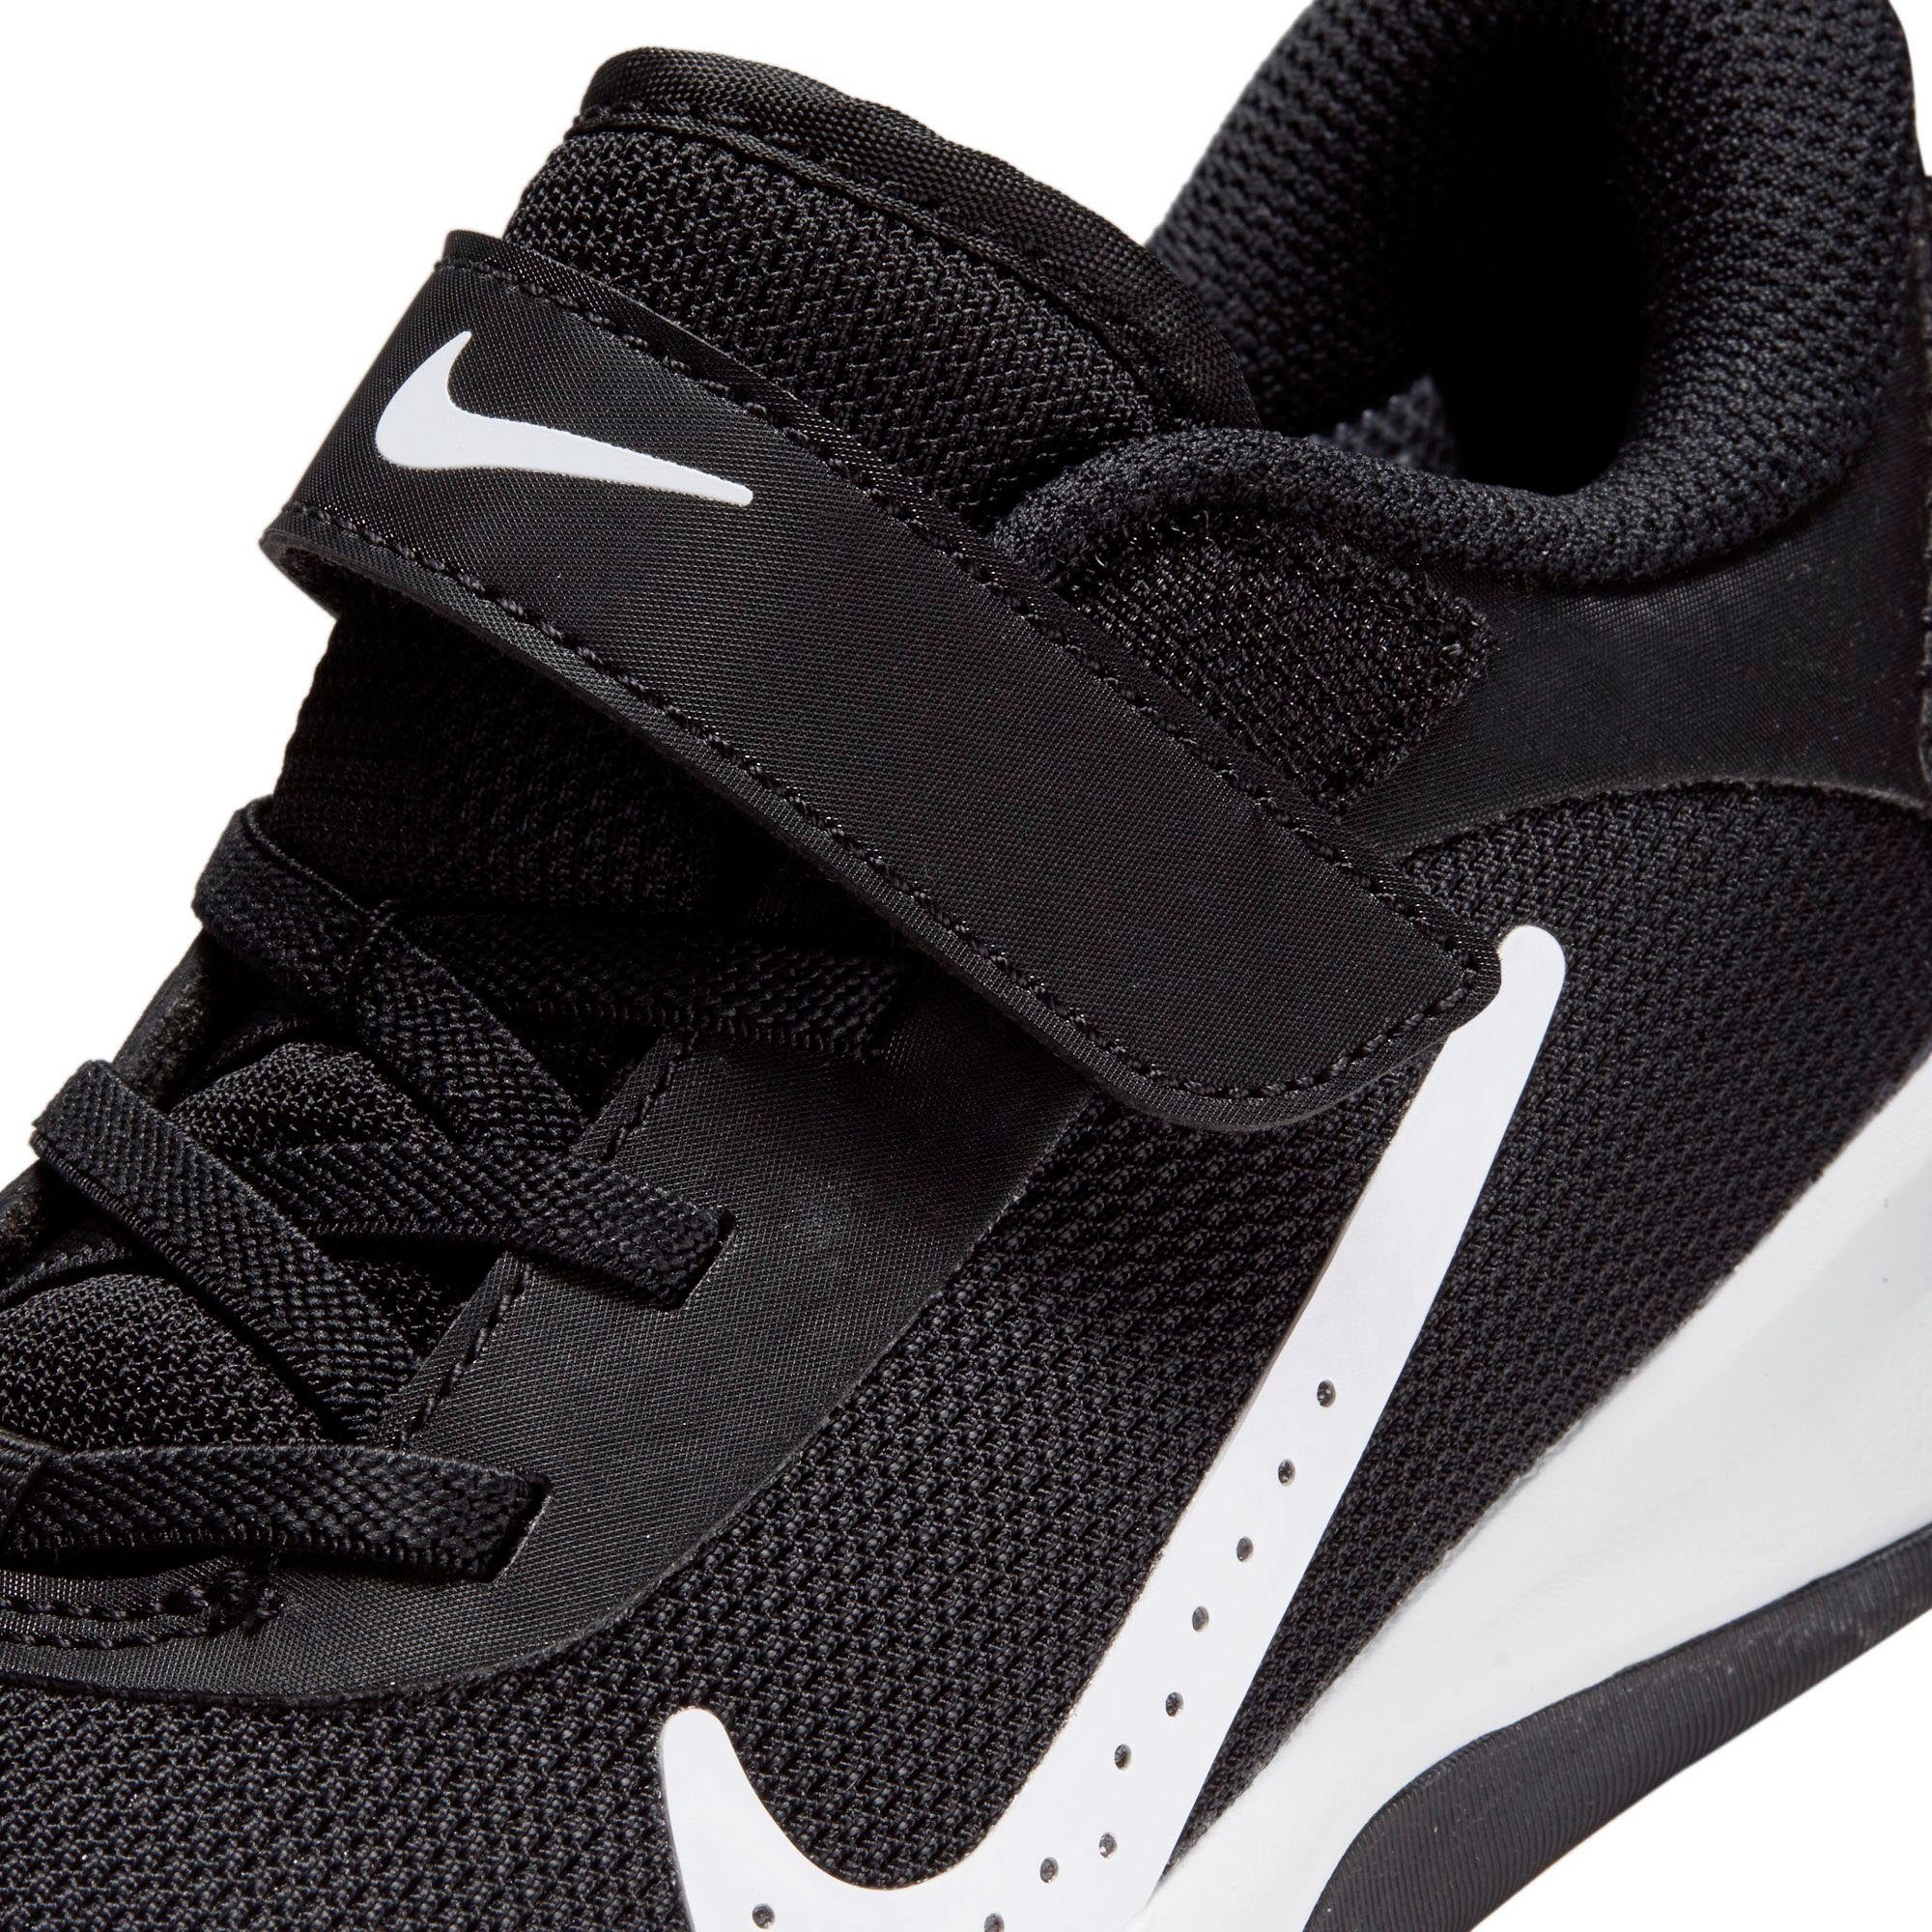 Hallenschuh black-white Multi-Court (PS) Omni Nike